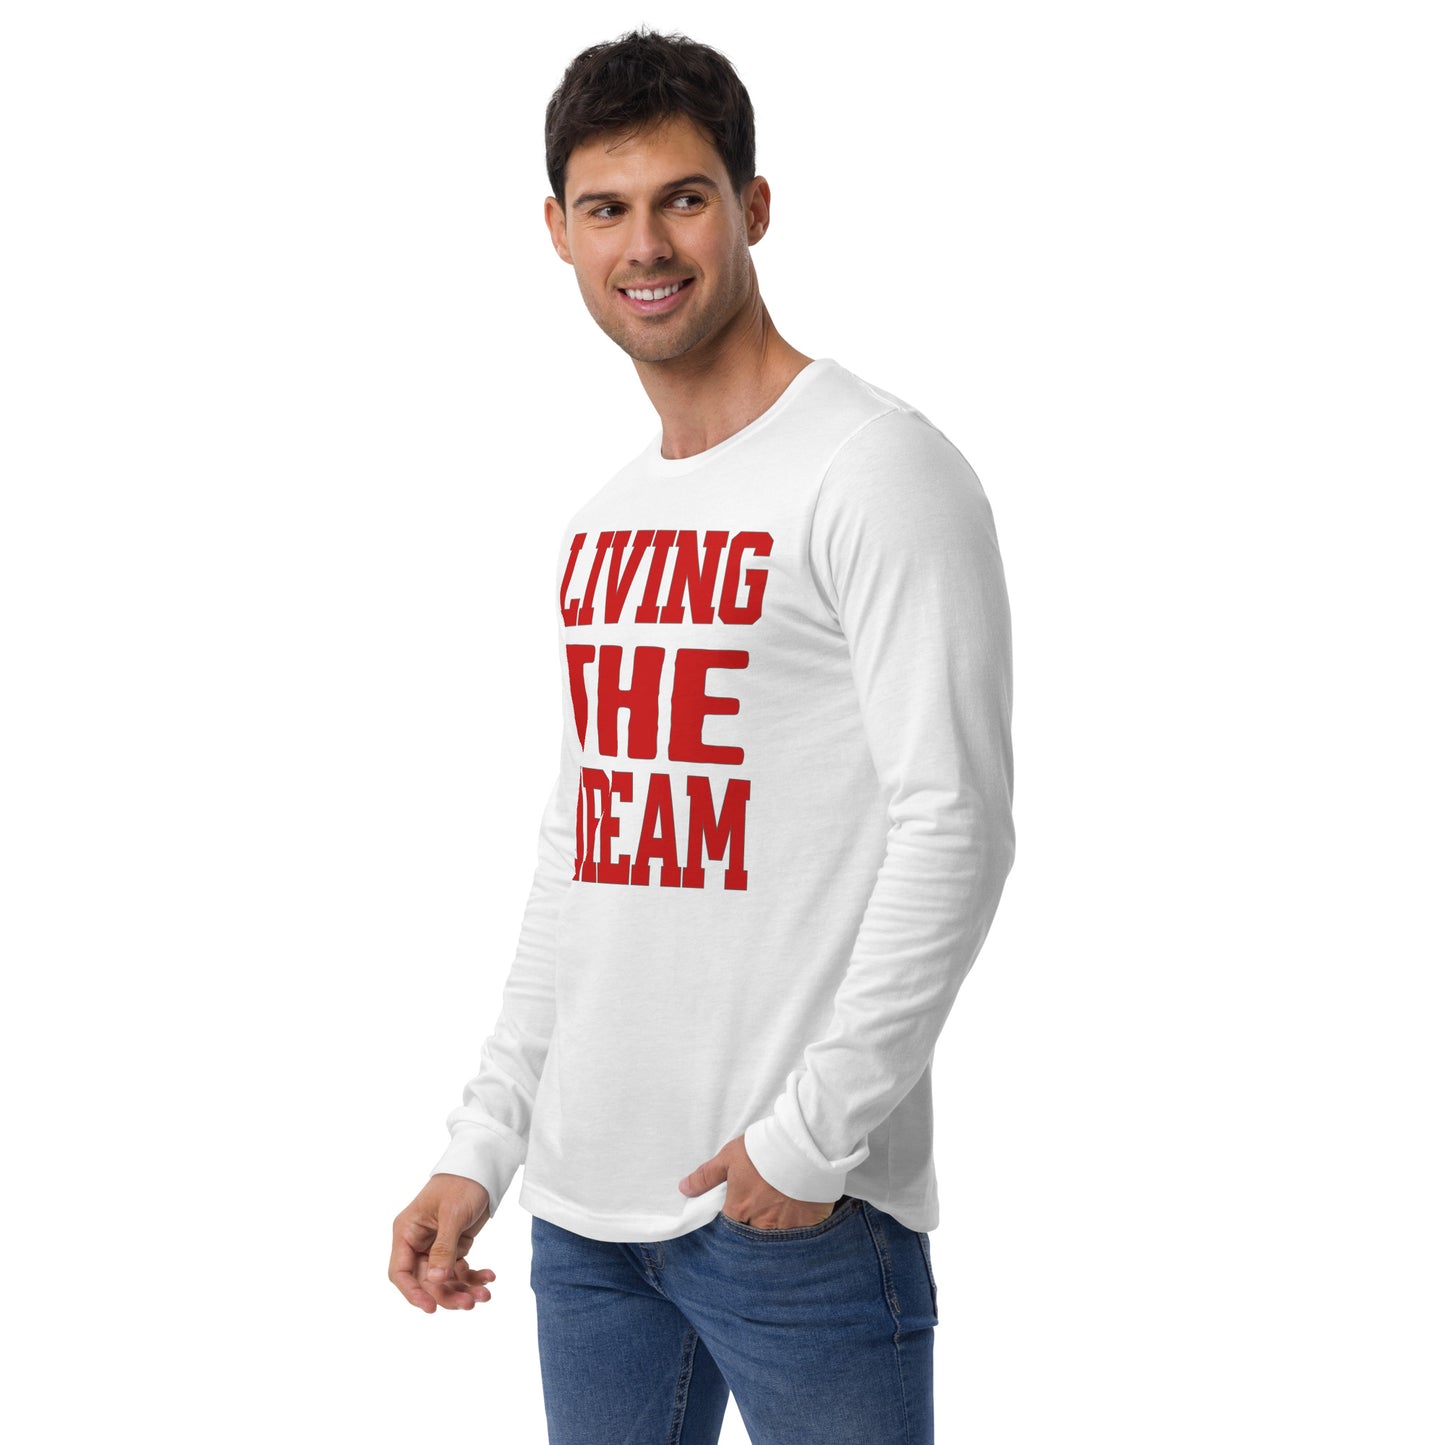 Living the Dream Unisex Long Sleeve Shirt